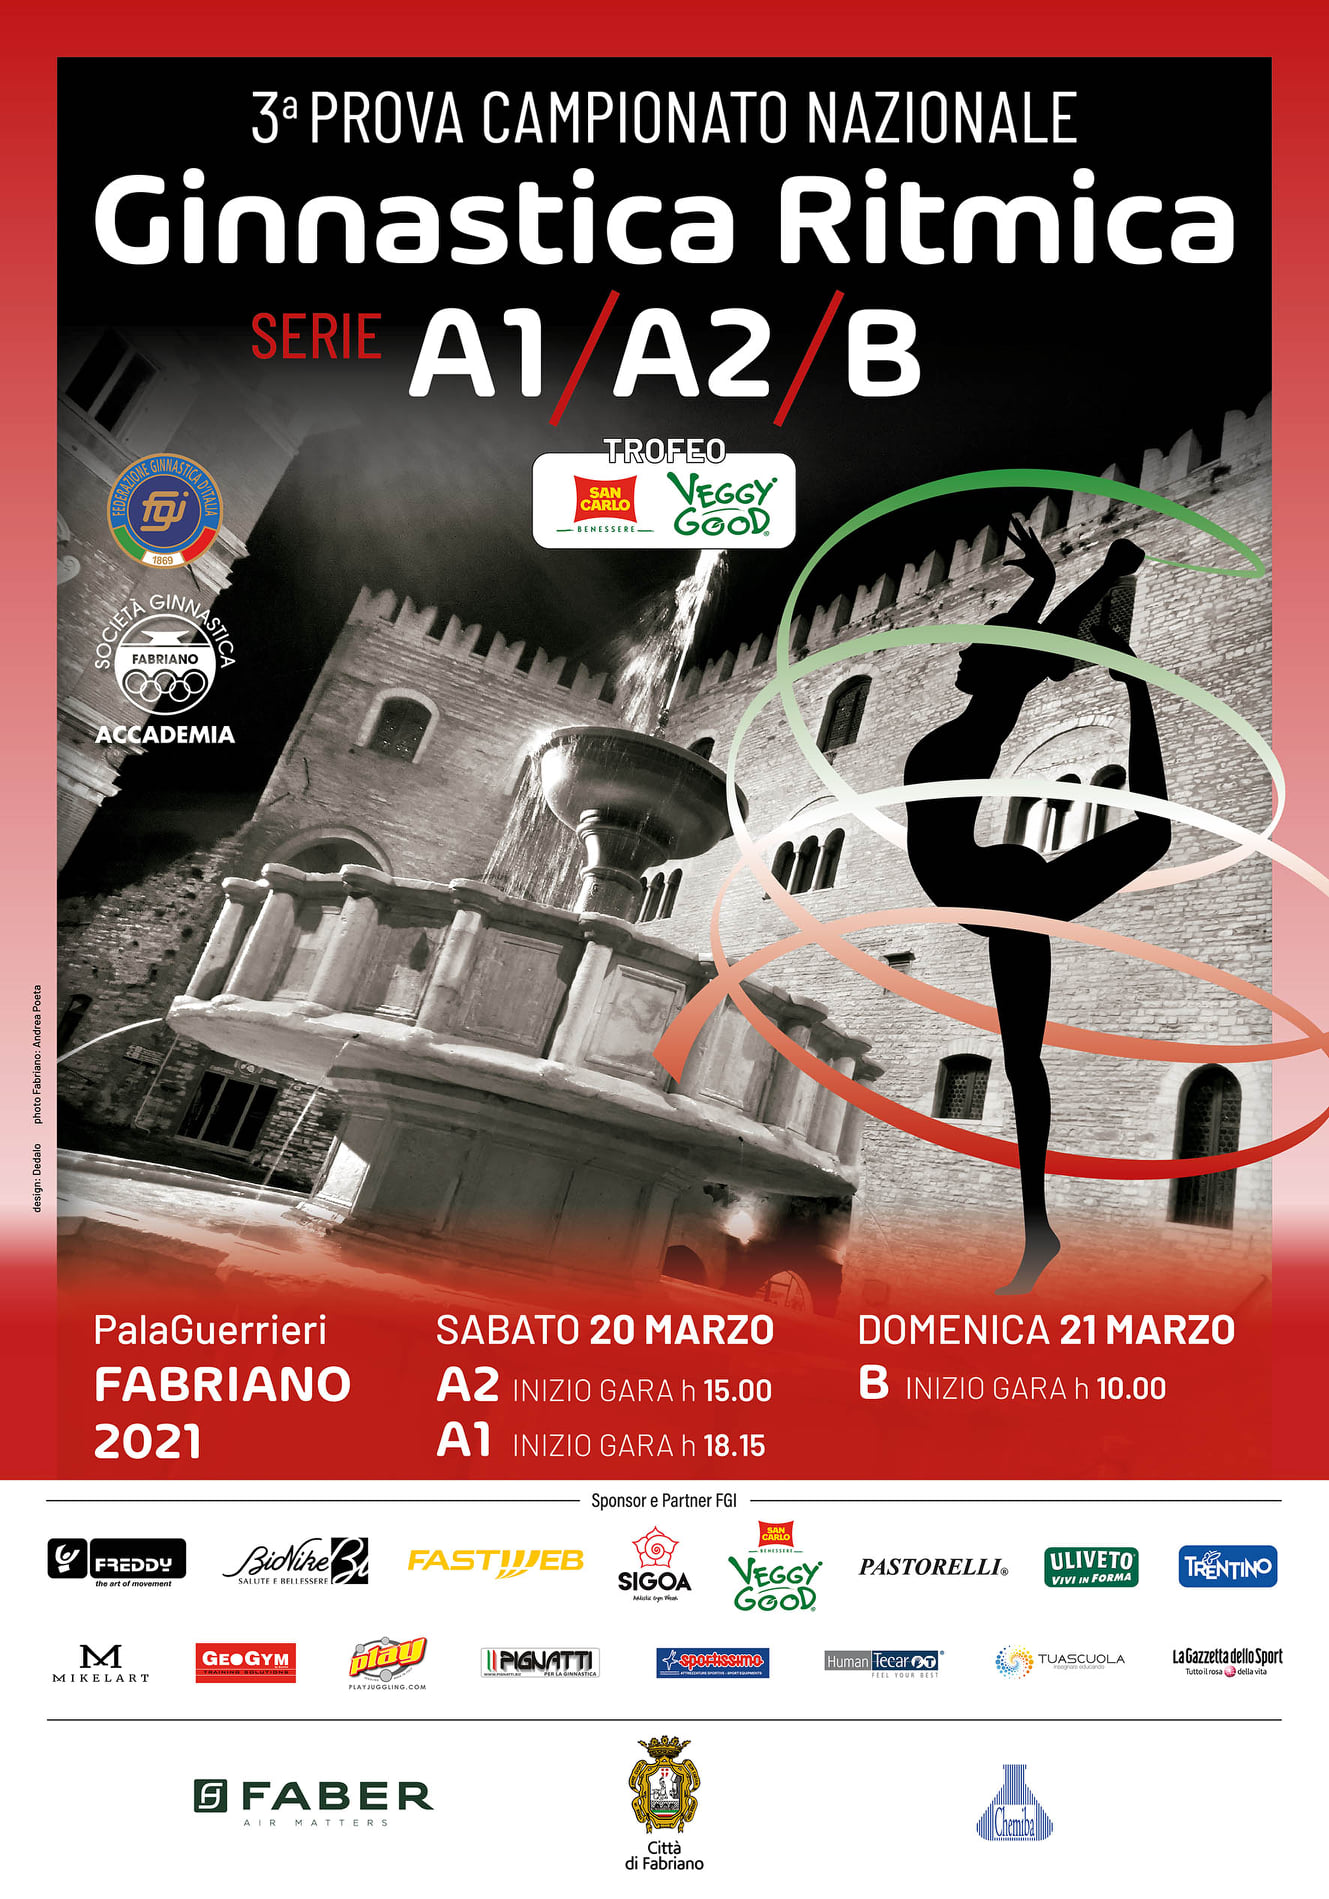 Italian Serie A Fabriano 2021 poster